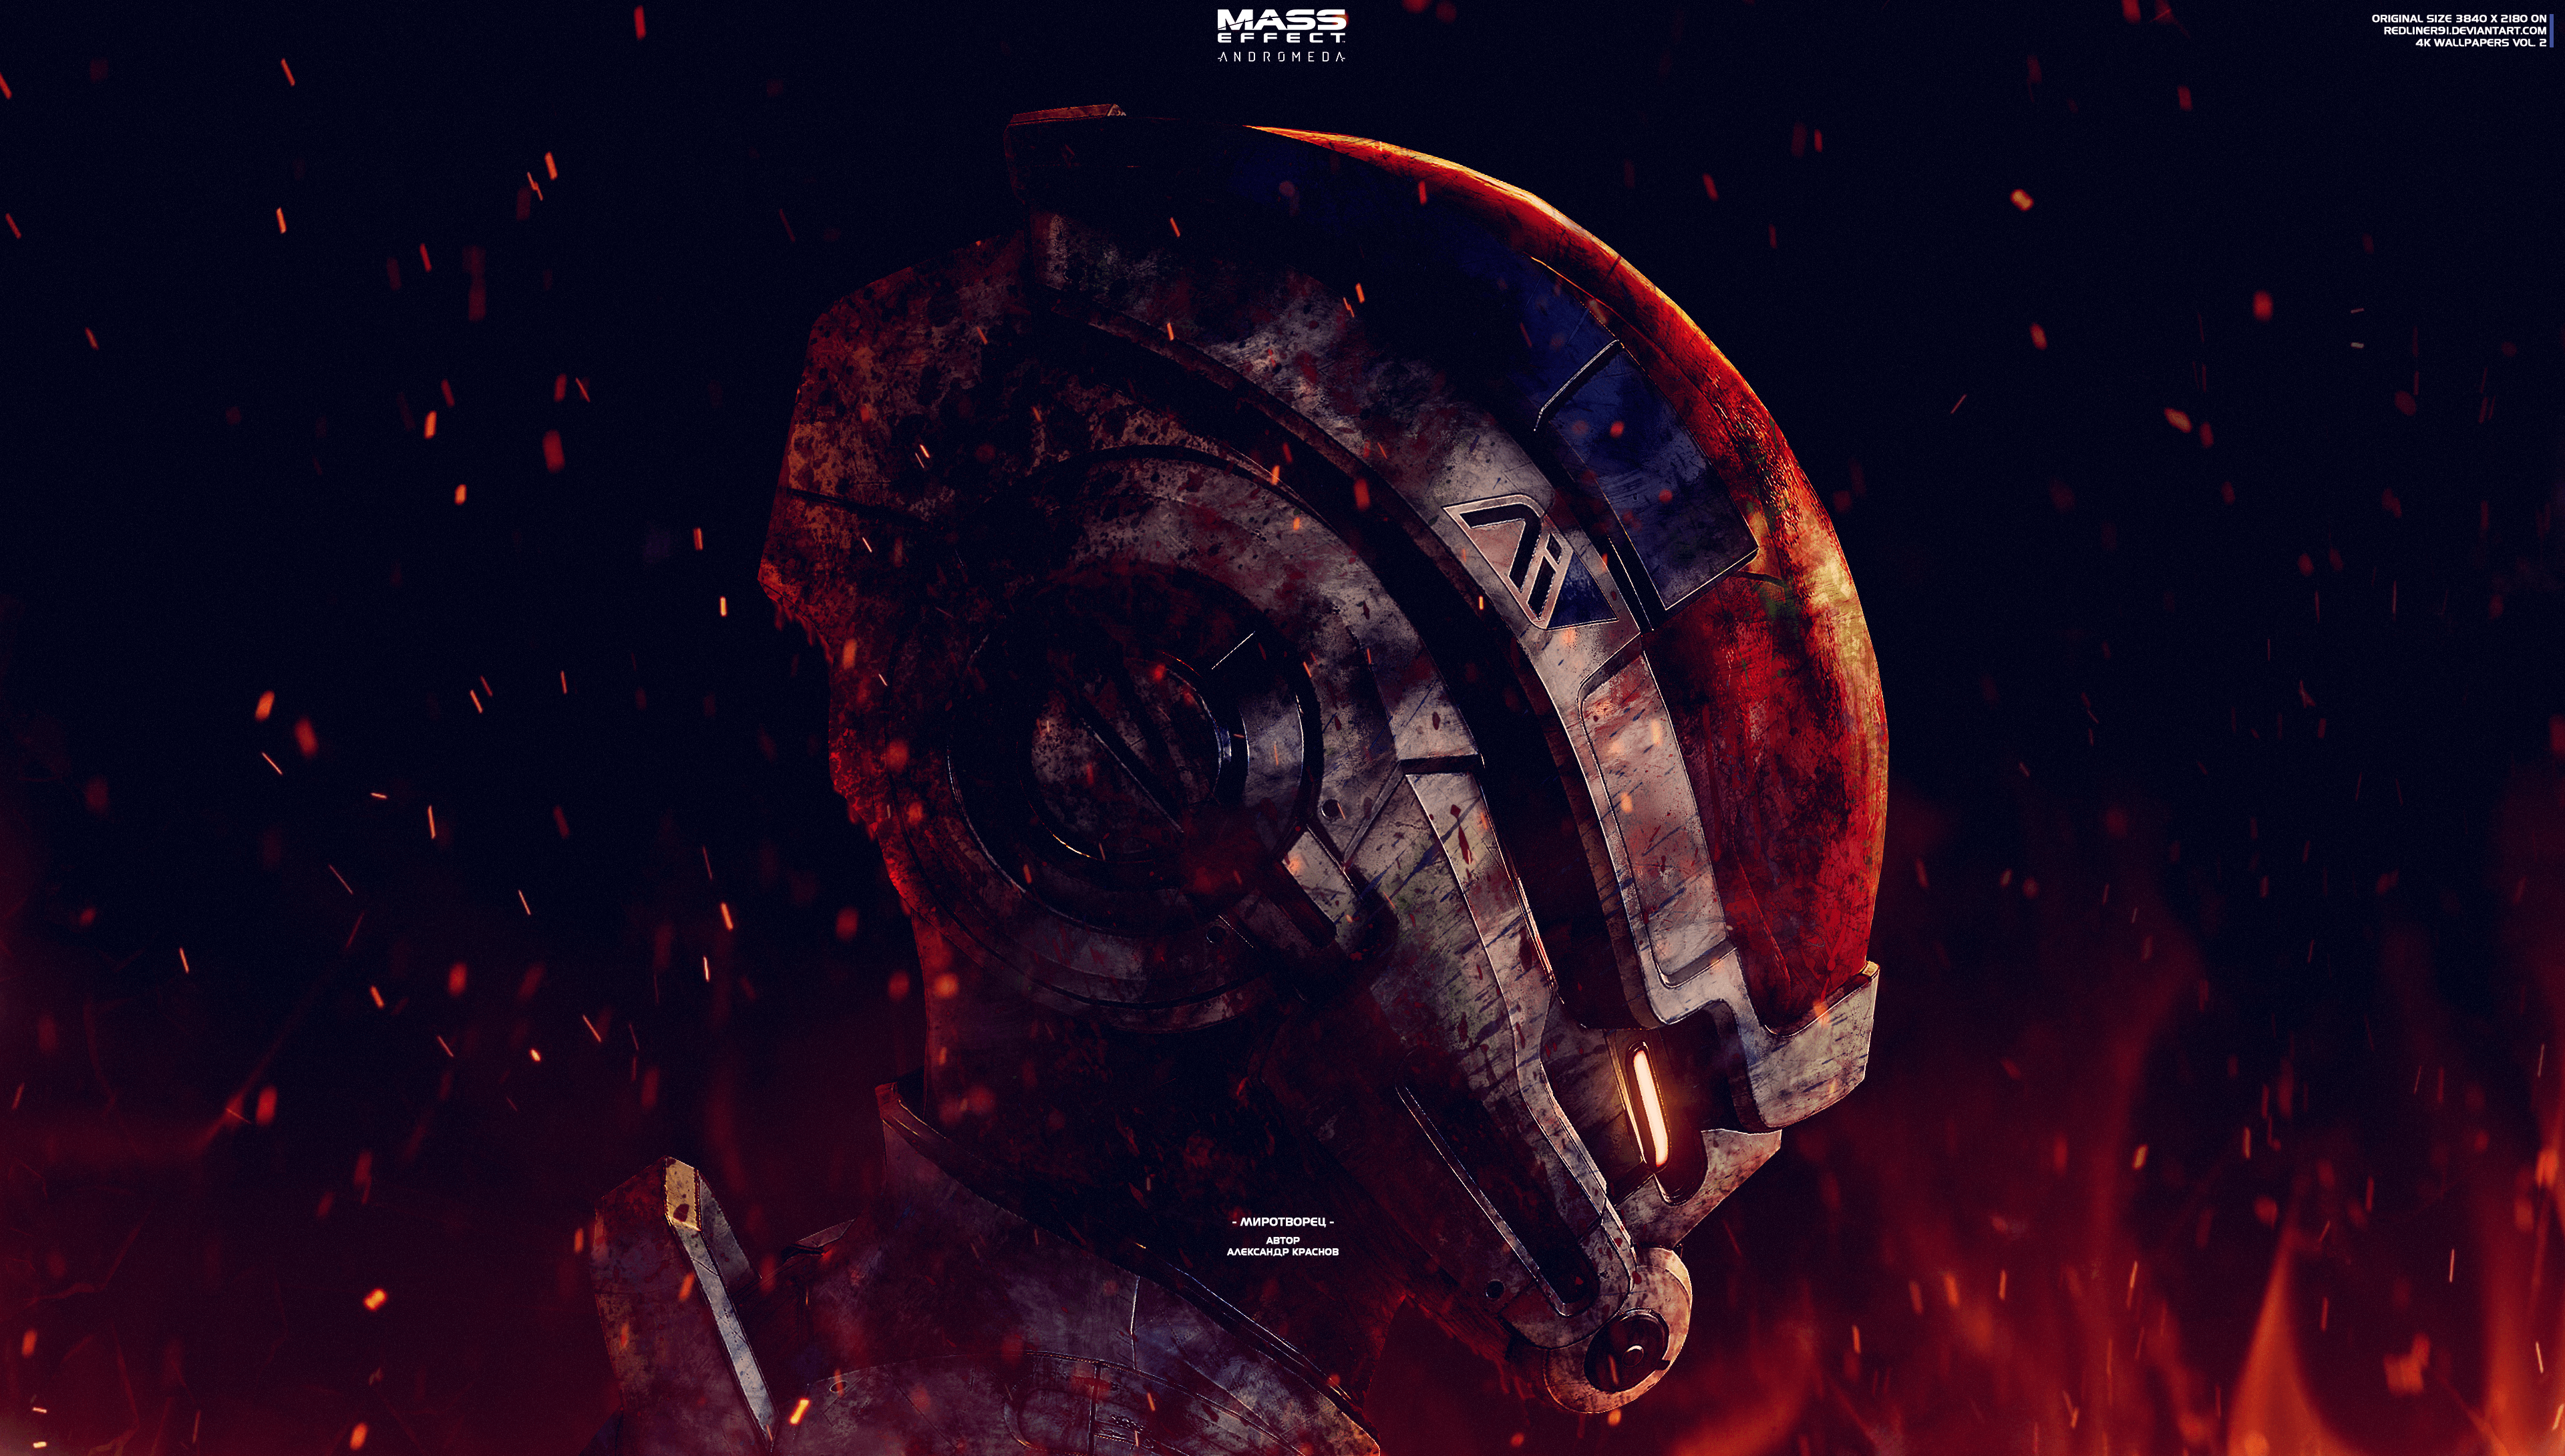 Mass Effect: Andromeda 4k Ultra HD Wallpaper. Background Image